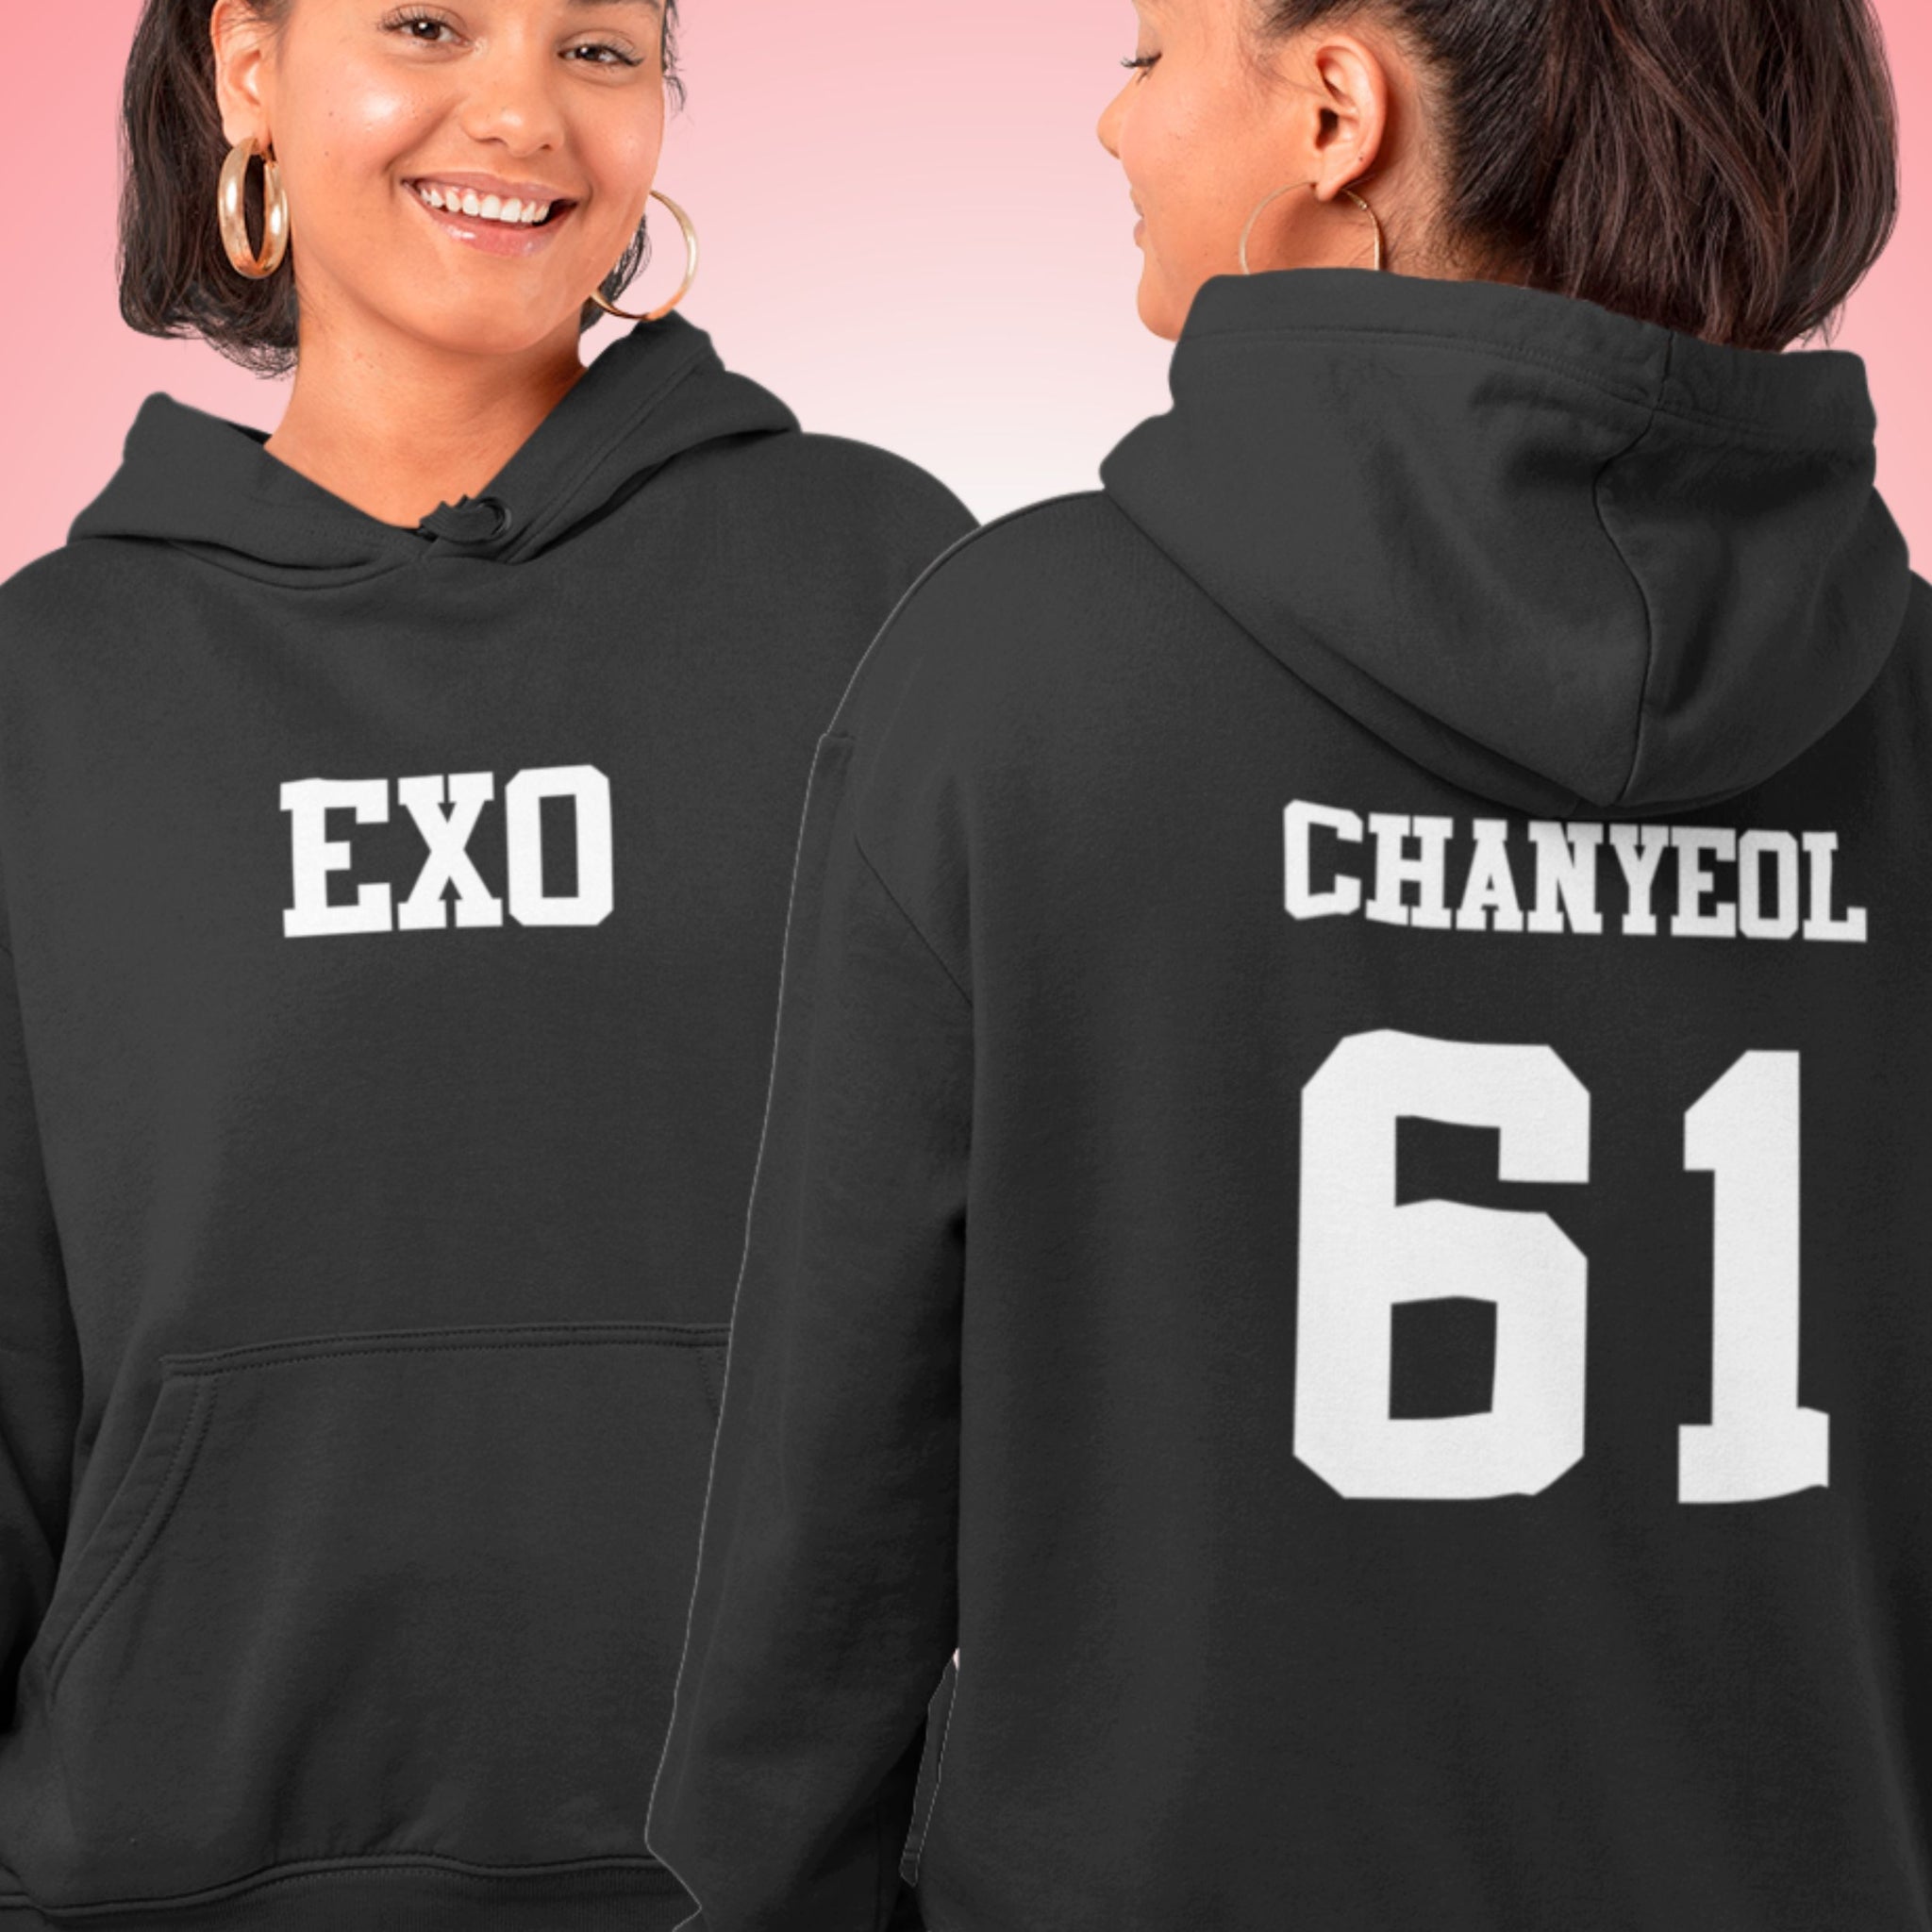 EXO - Chanyeol 61 F&B Unisex Hoodie